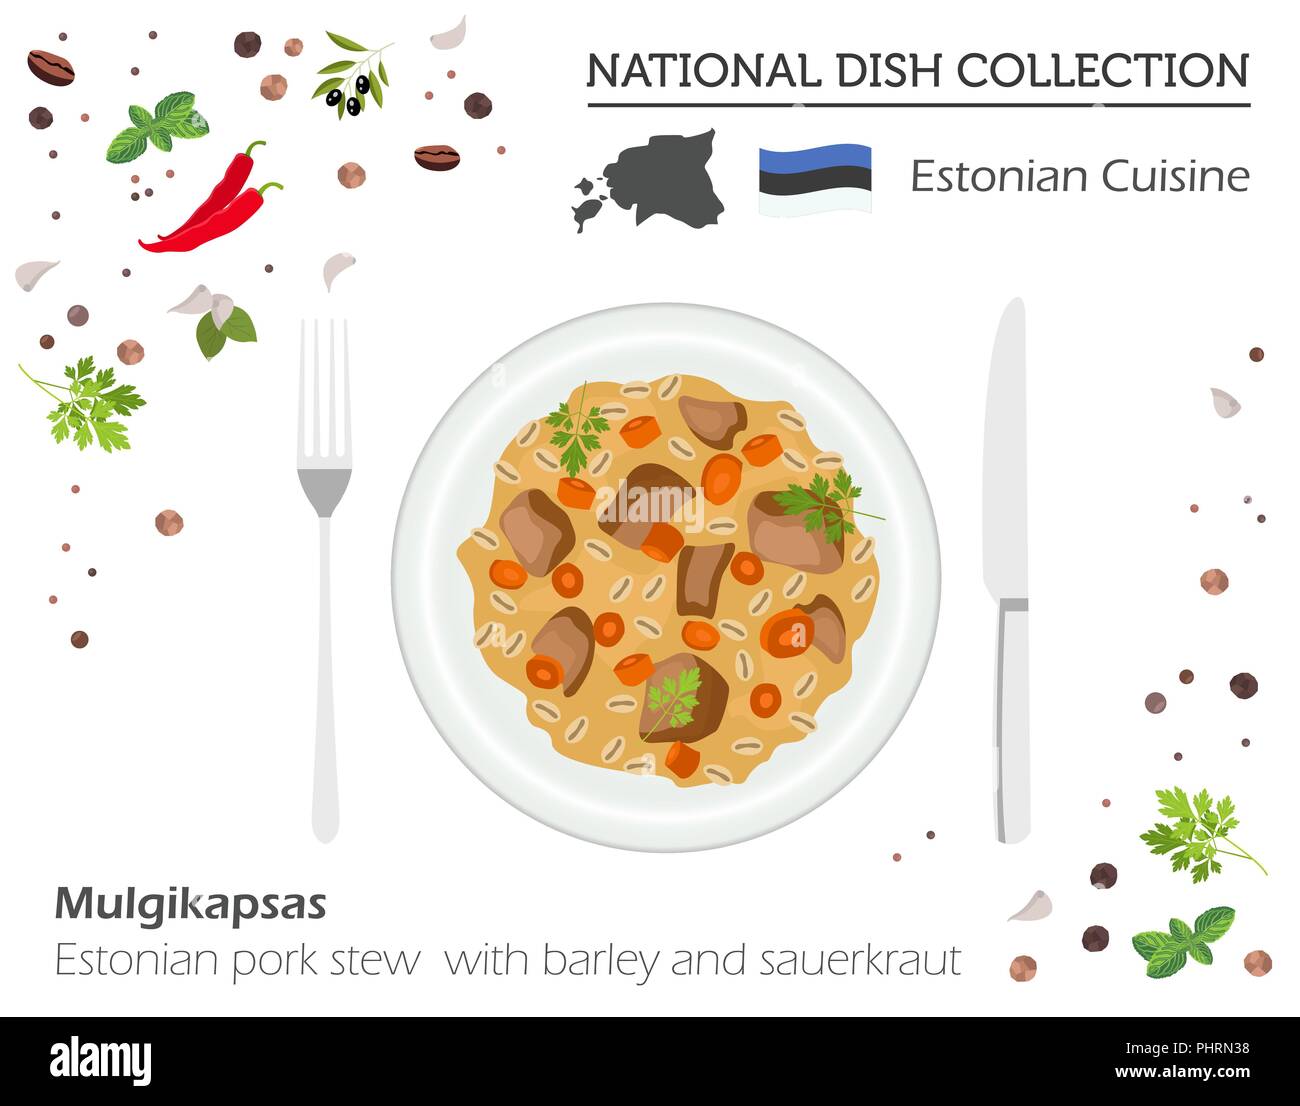 Estonia Cuisine. European national dish collection. Estonian pork stew isolated on white, infographic. Vector illustration Stock Vector